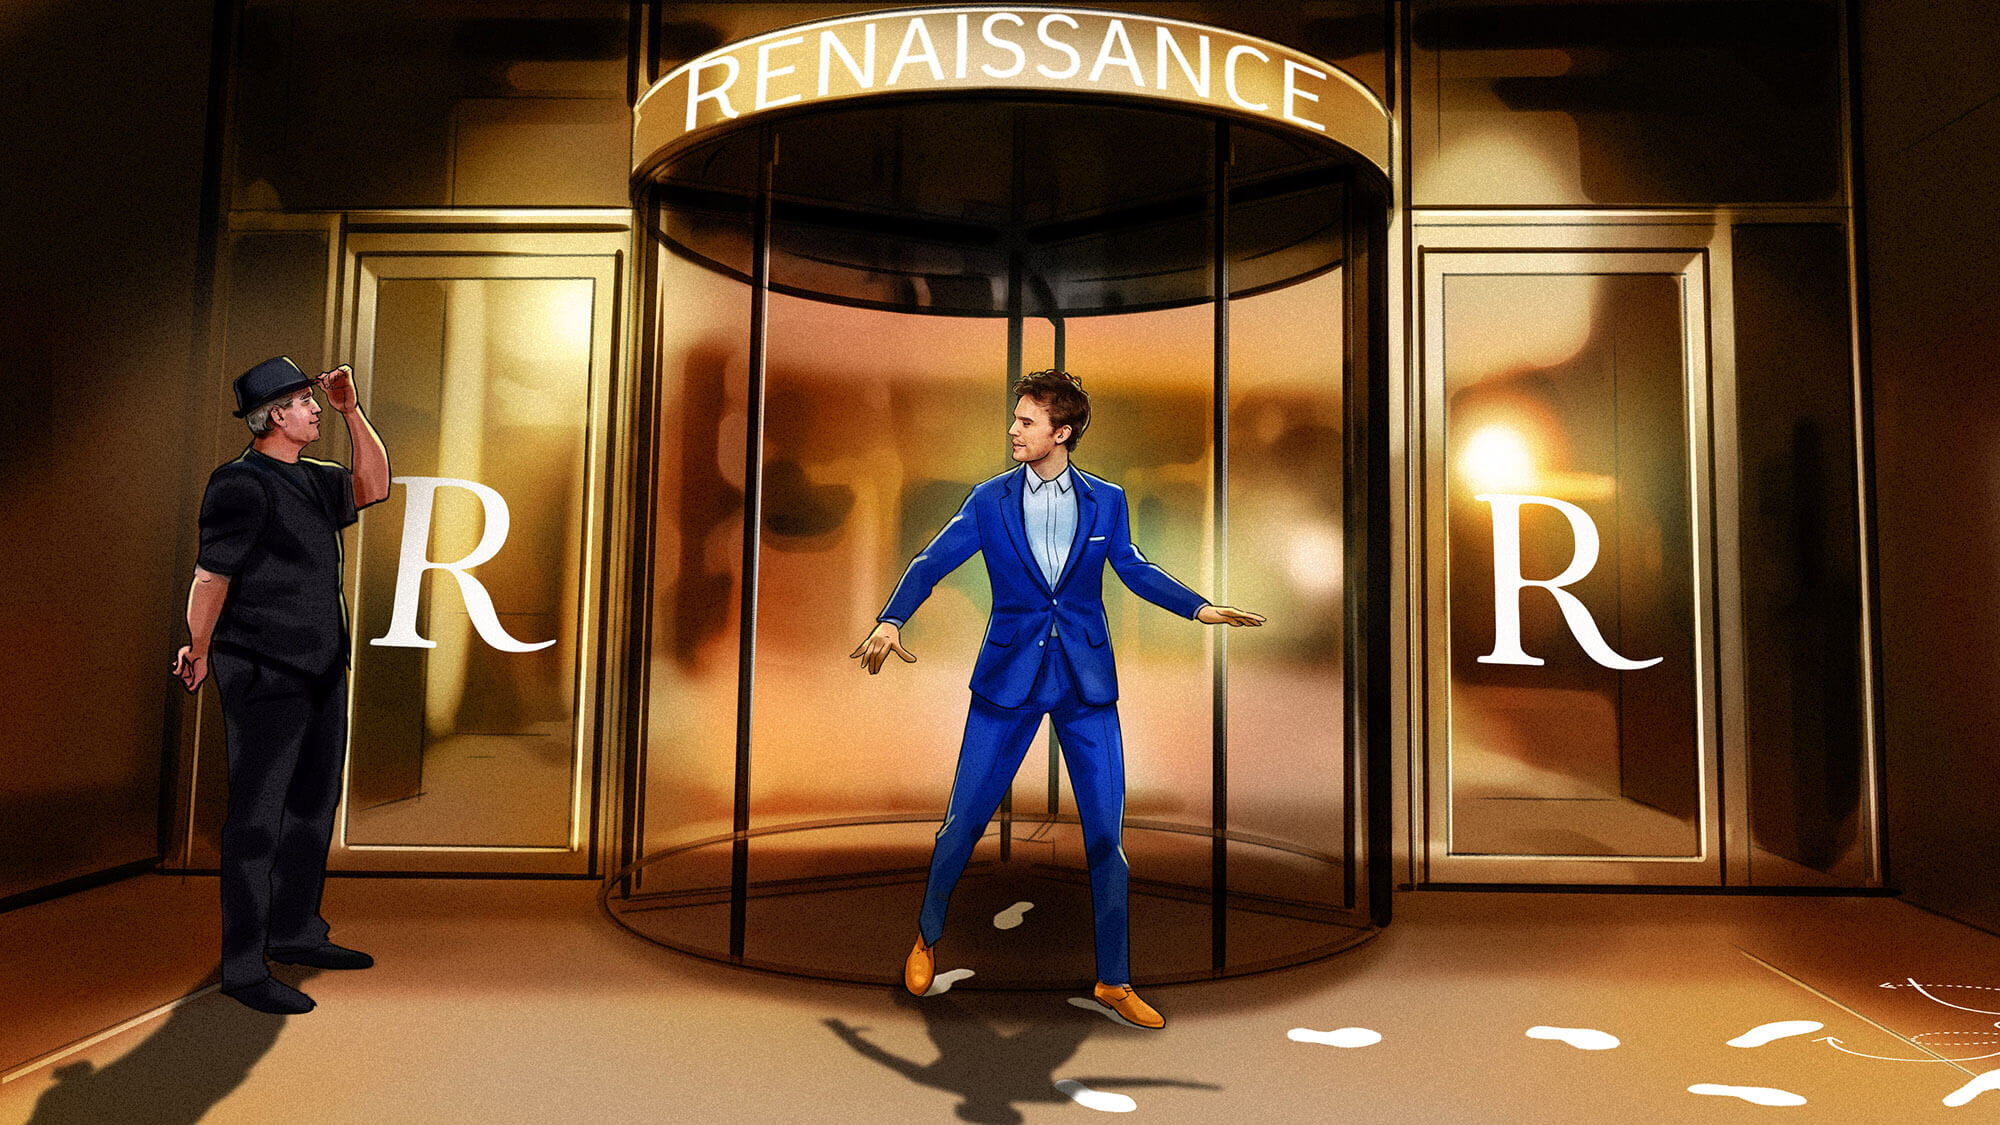 Renaissance_Hotels_Storyboards_3.jpg